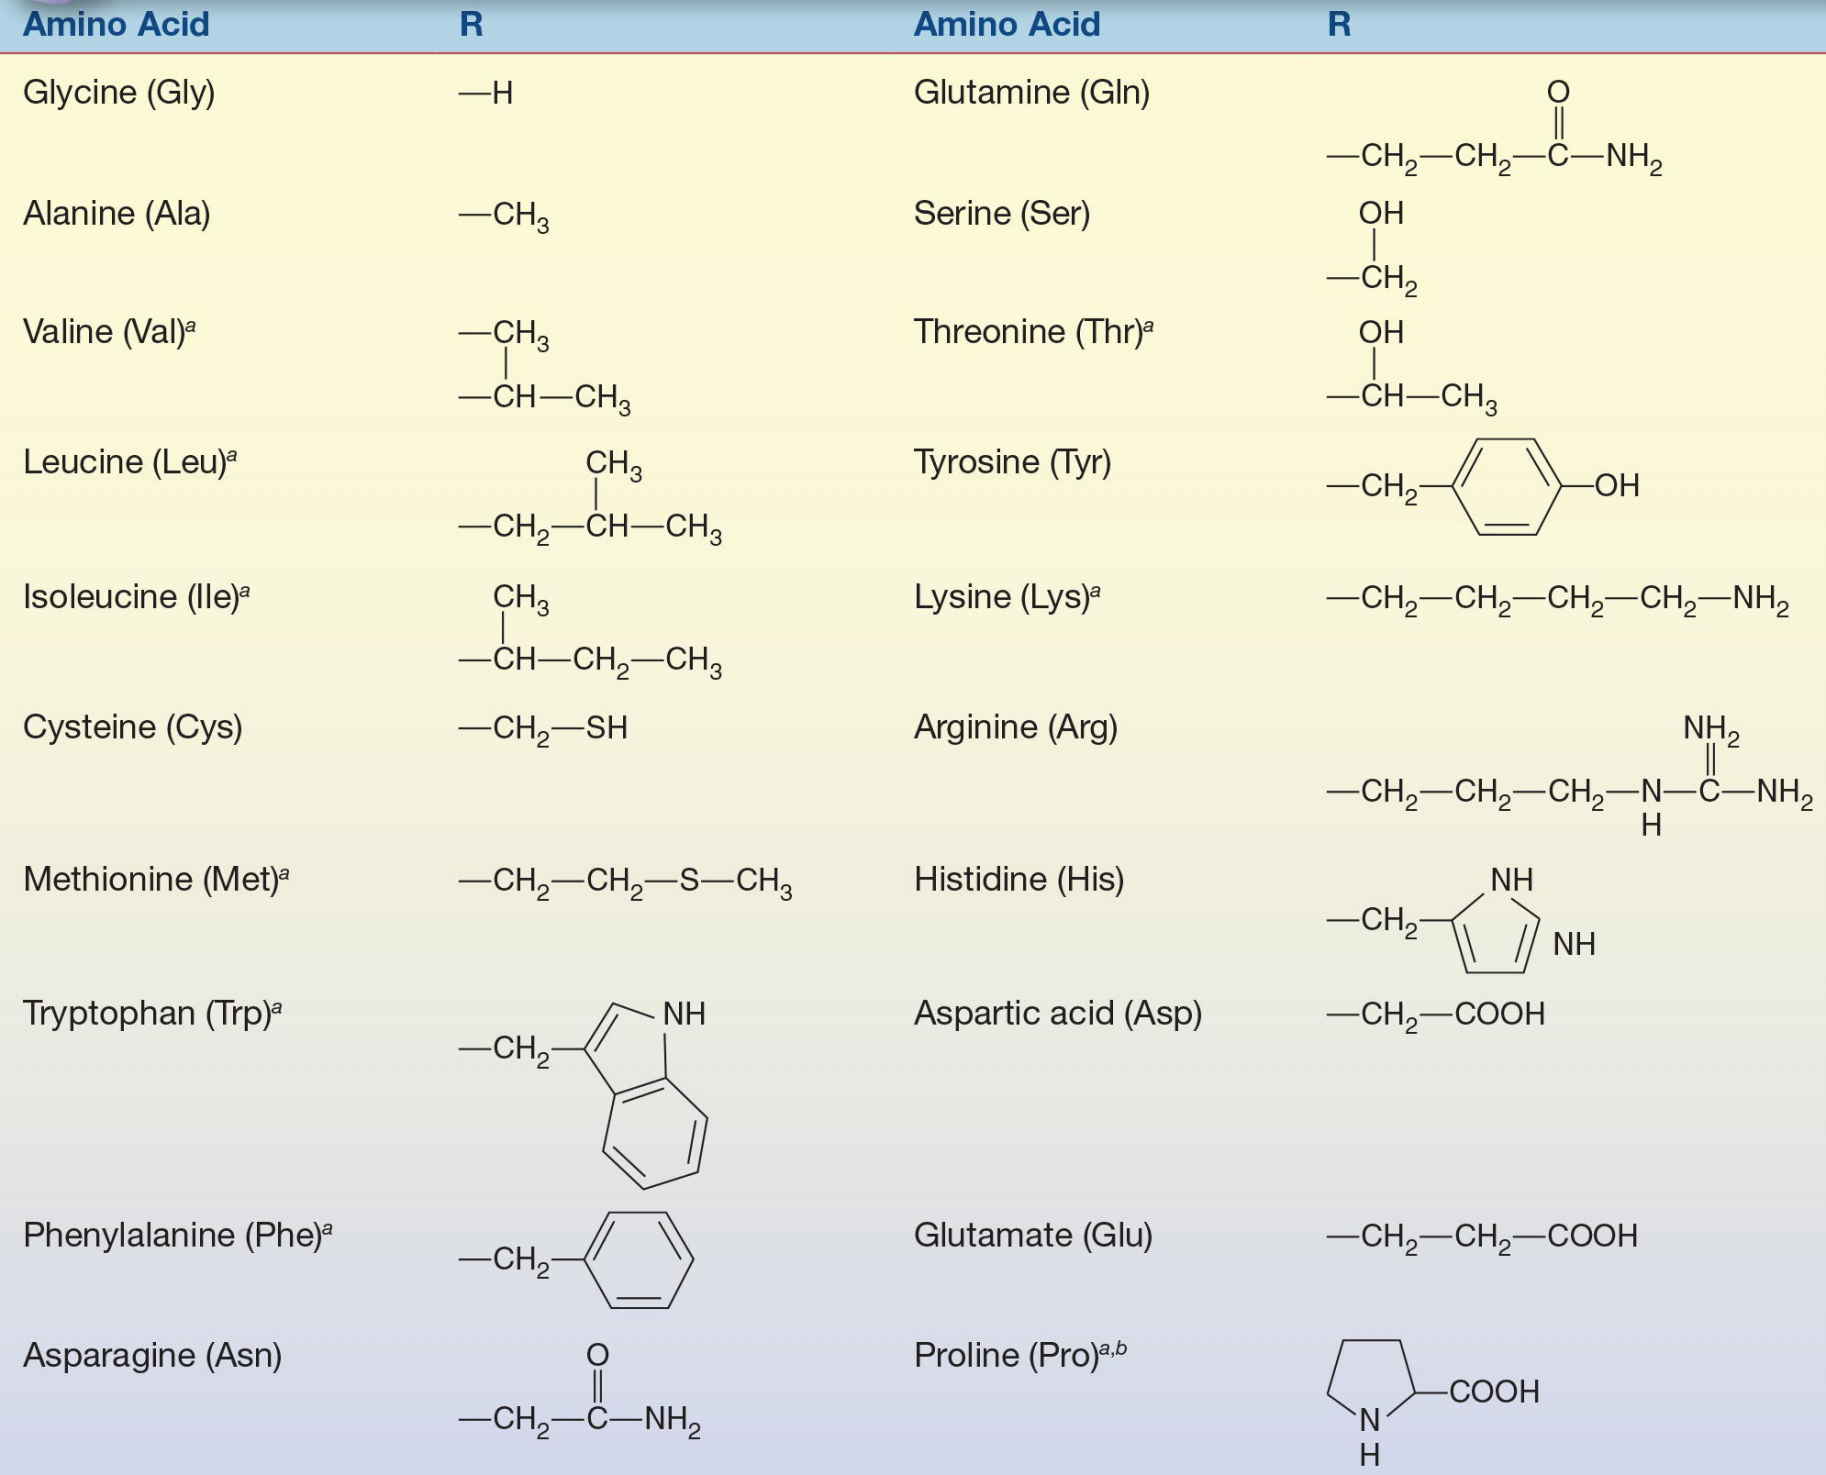 family hydrophobic amino acids